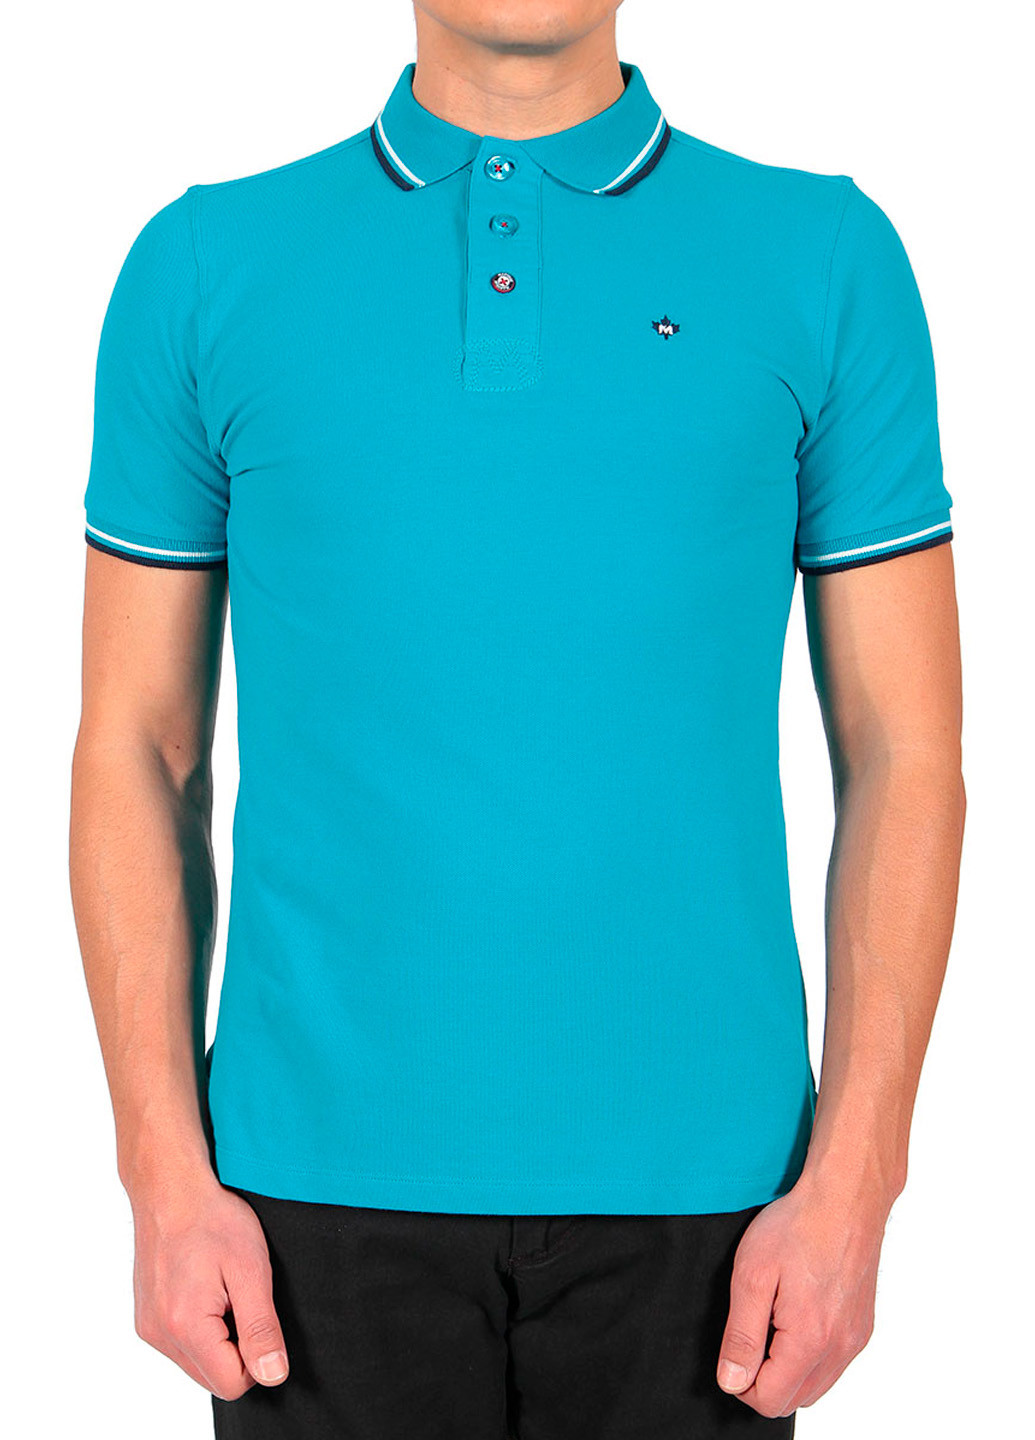 Голубой футболка-поло для мужчин Marville